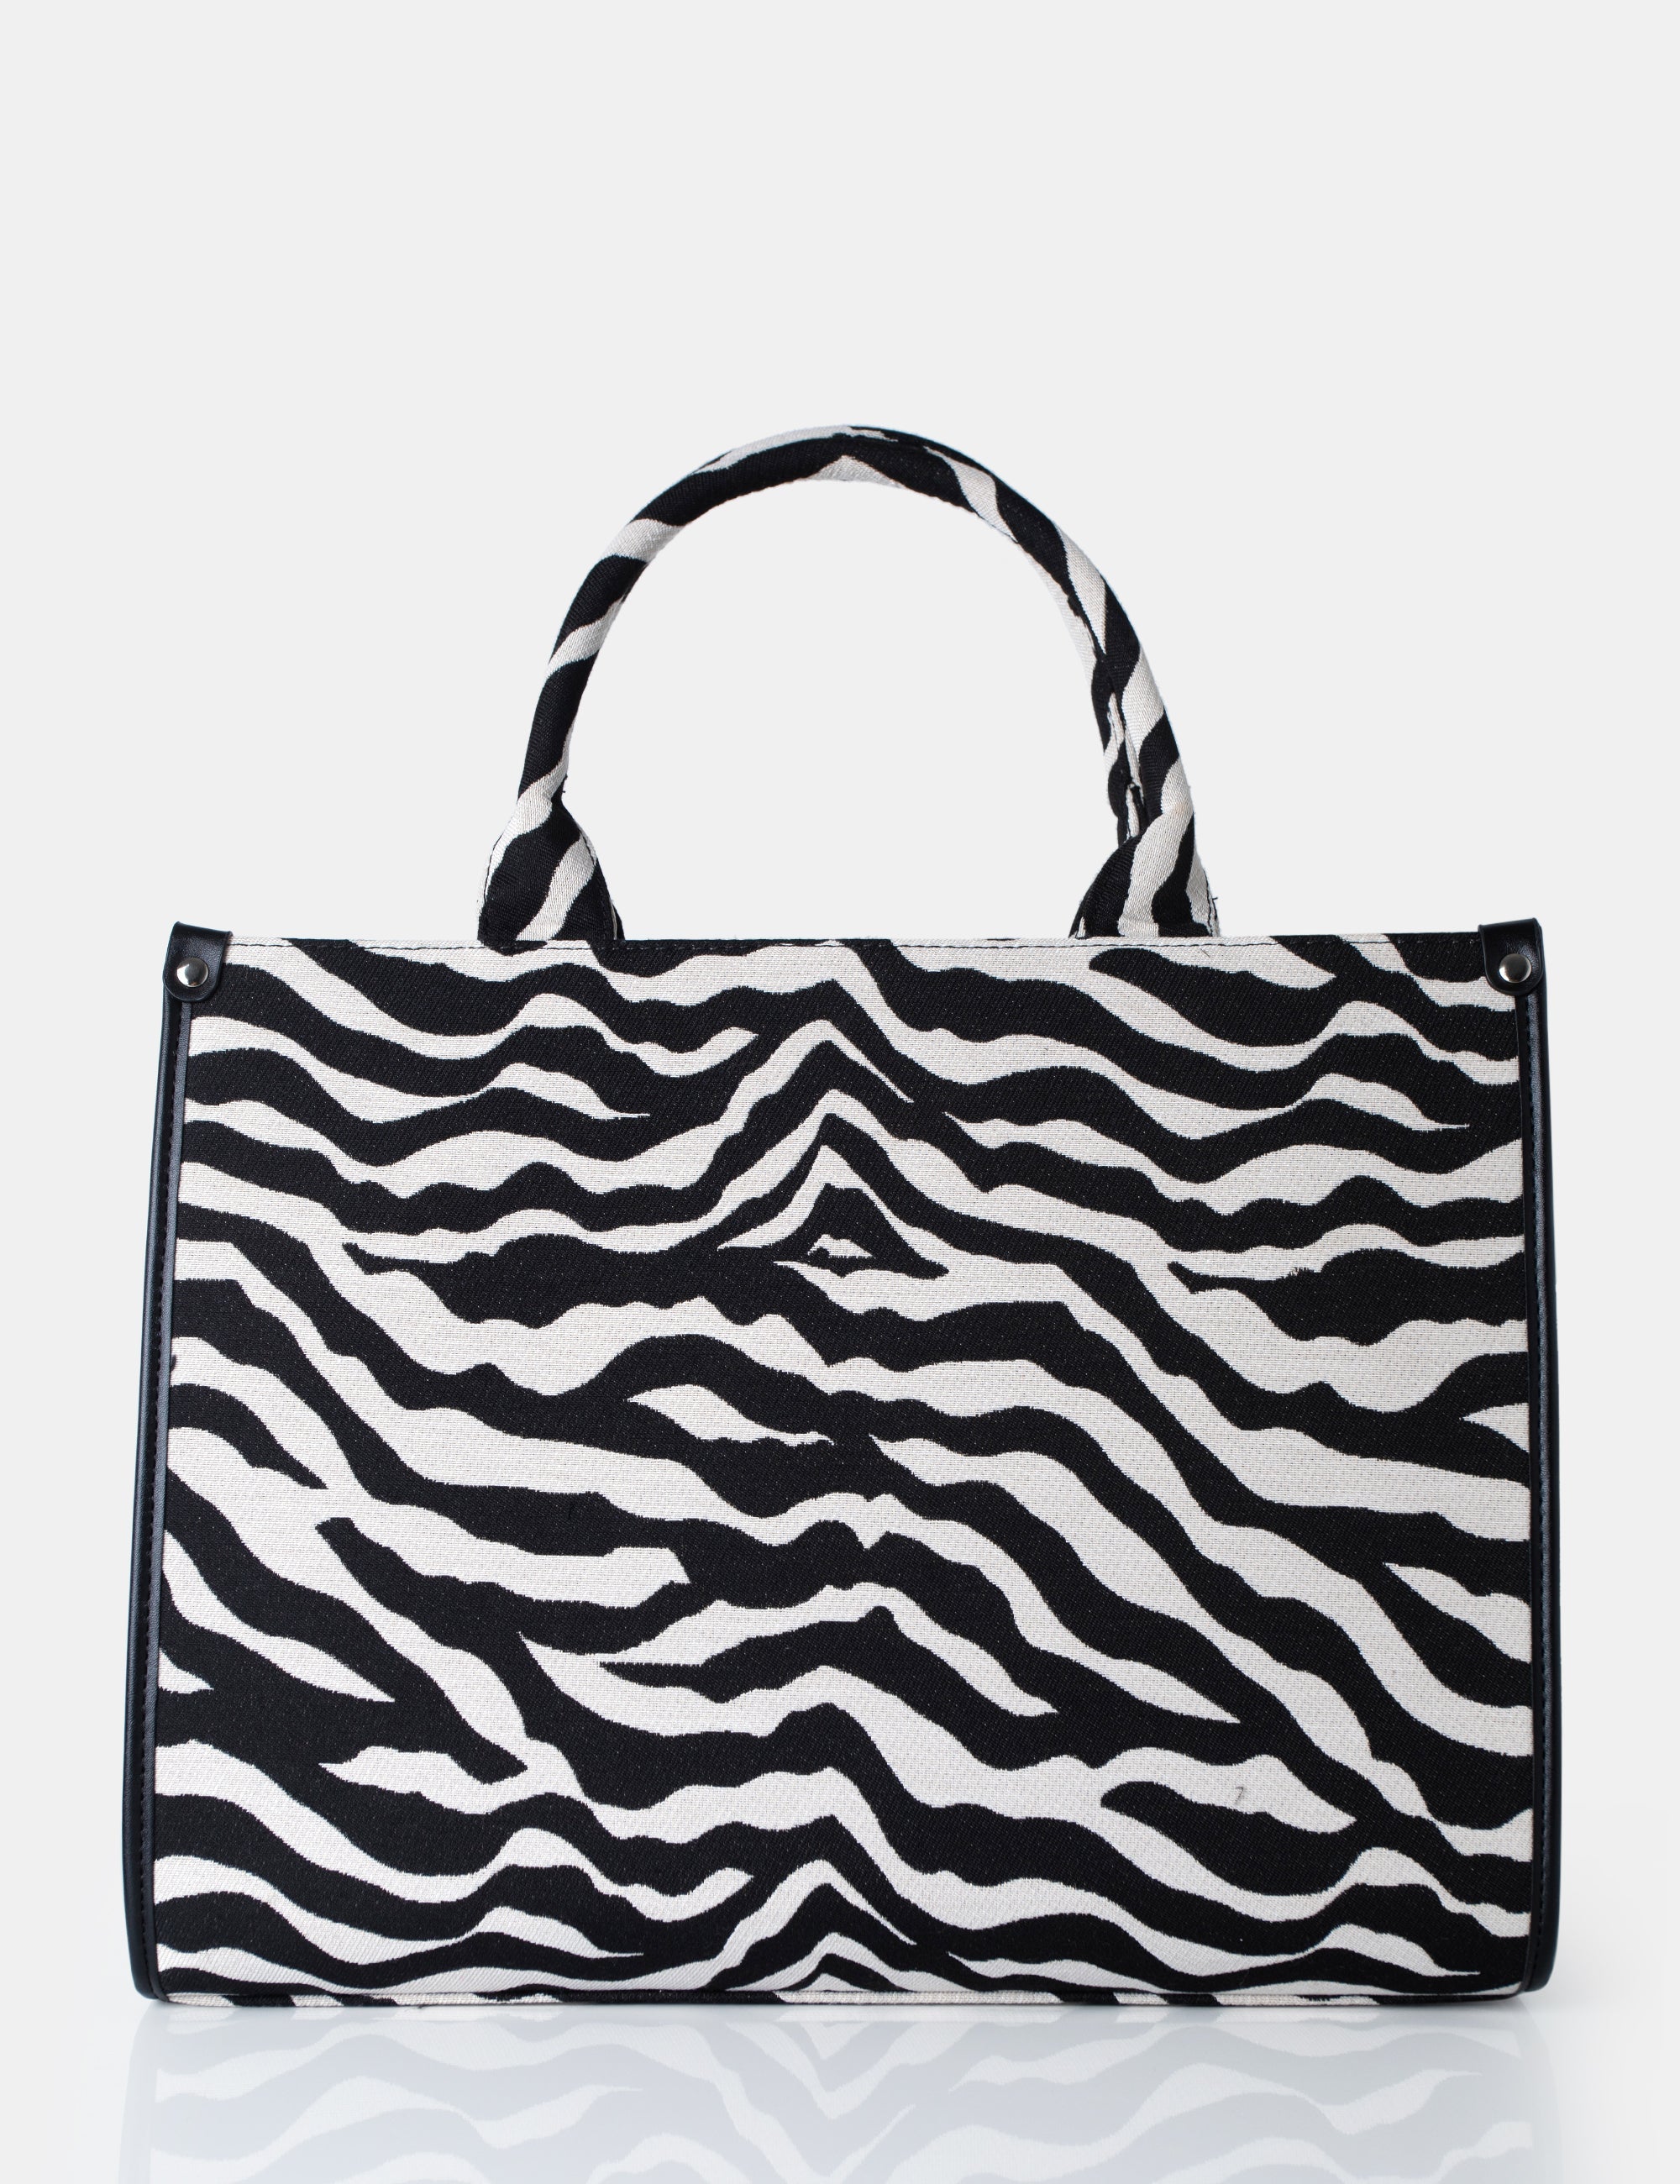 The Bali Zebra Print Canvas Tote Bag product